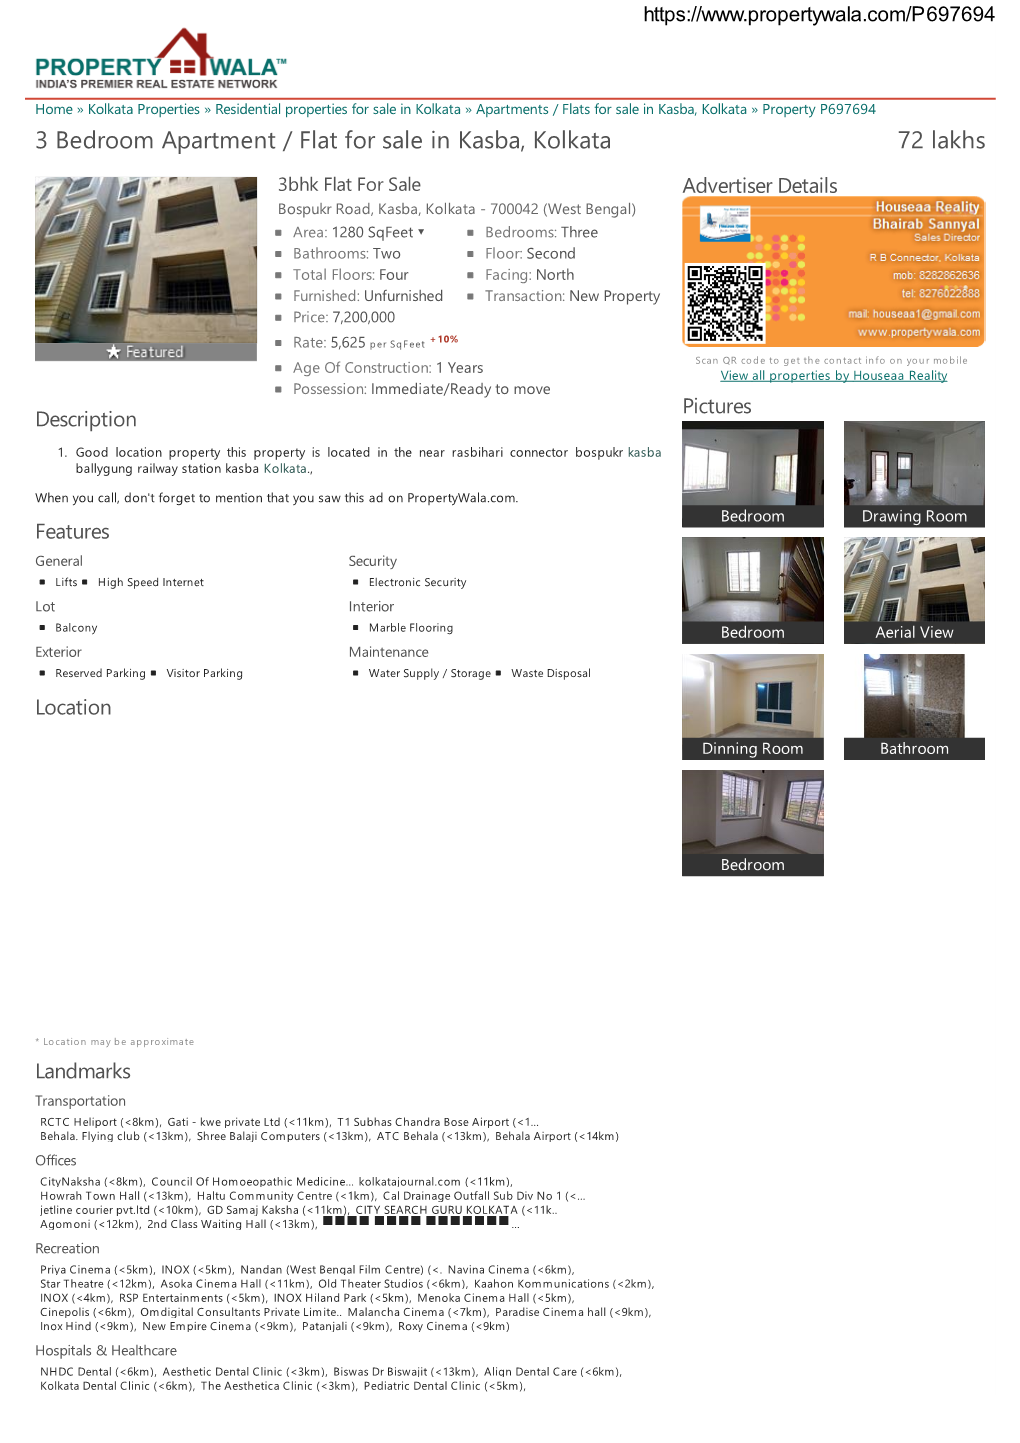 3 Bedroom Apartment / Flat for Sale in Kasba, Kolkata (P697694